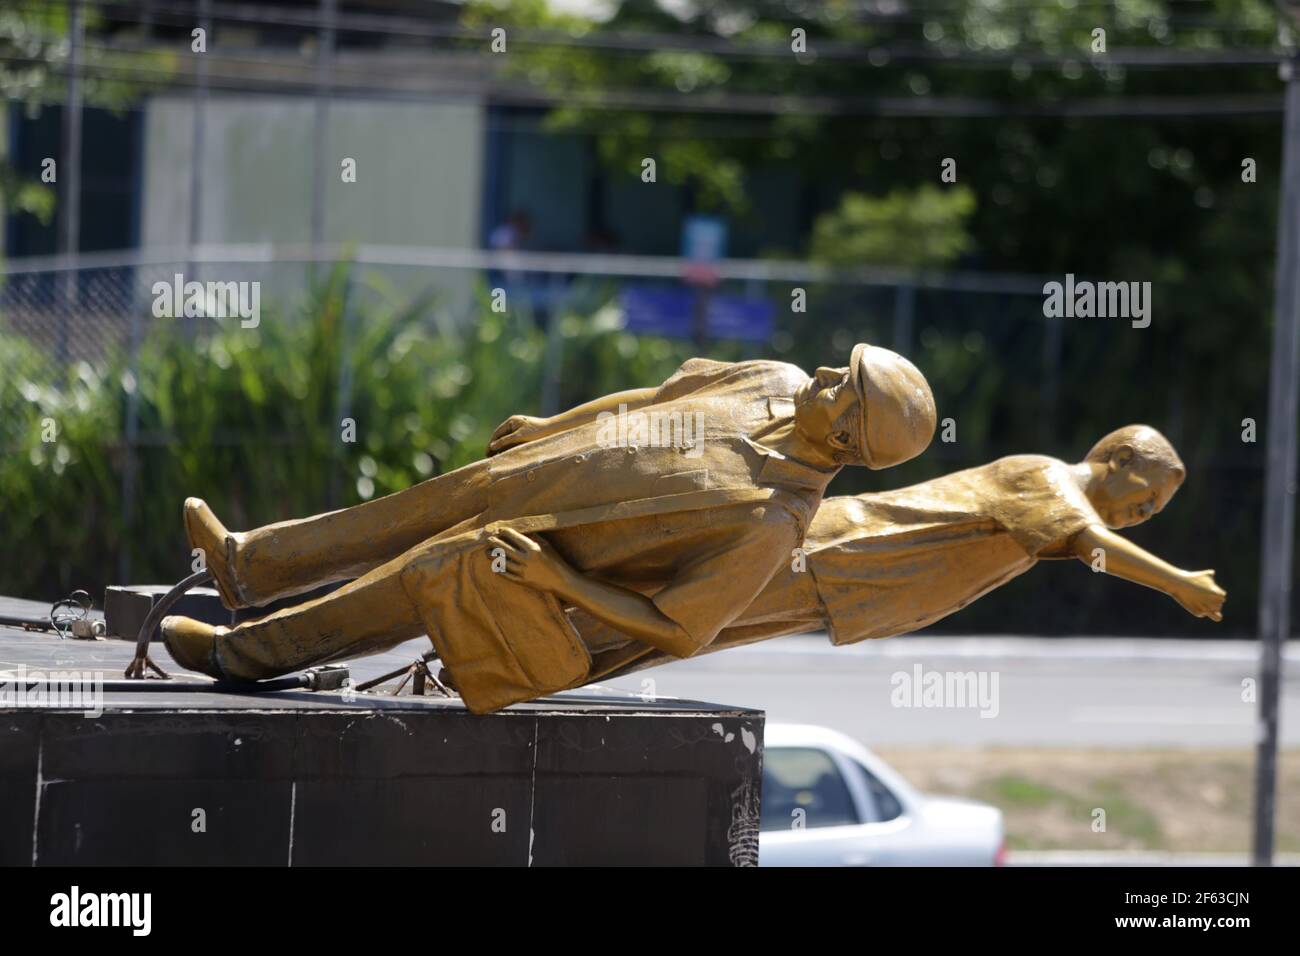 salvador, bahia / brazil - november 19, 2018: Statue of Jorge Amado and Zelia Gattai is seen tumbled due to vandelism in the neighborhood of Imbui in Stock Photo